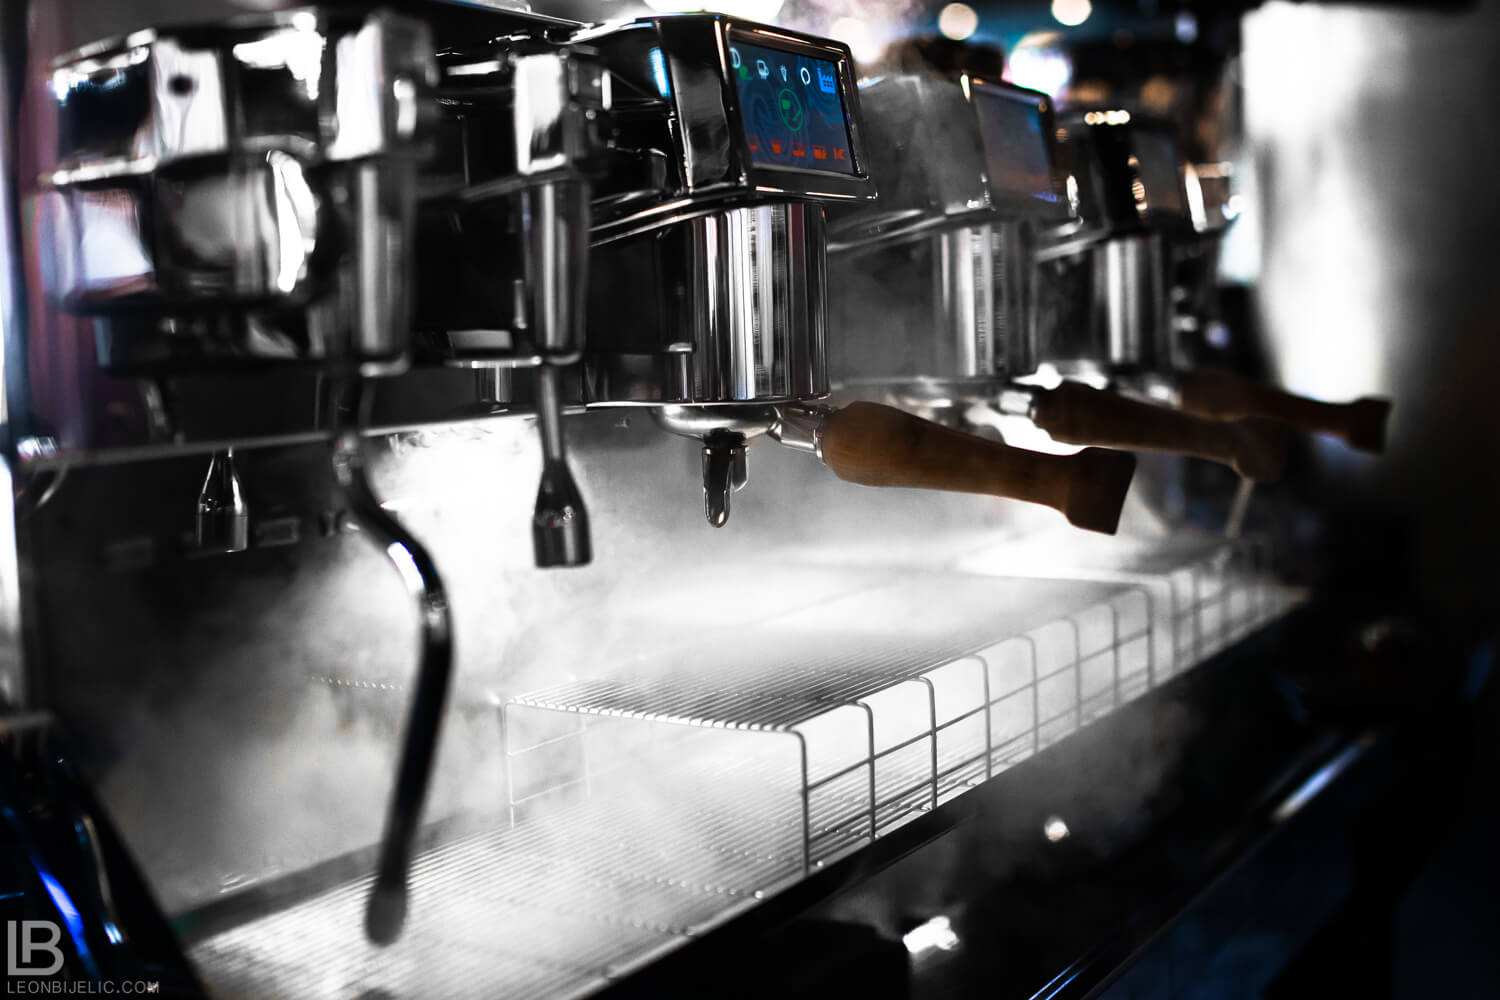 RESTAURANT BIZARRE DIVERSE BAR - ELEKTRA COFFEE MACHINE - BANJA LUKA - LEON BIJELIC COMMERCIAL PHOTOGRAPHY